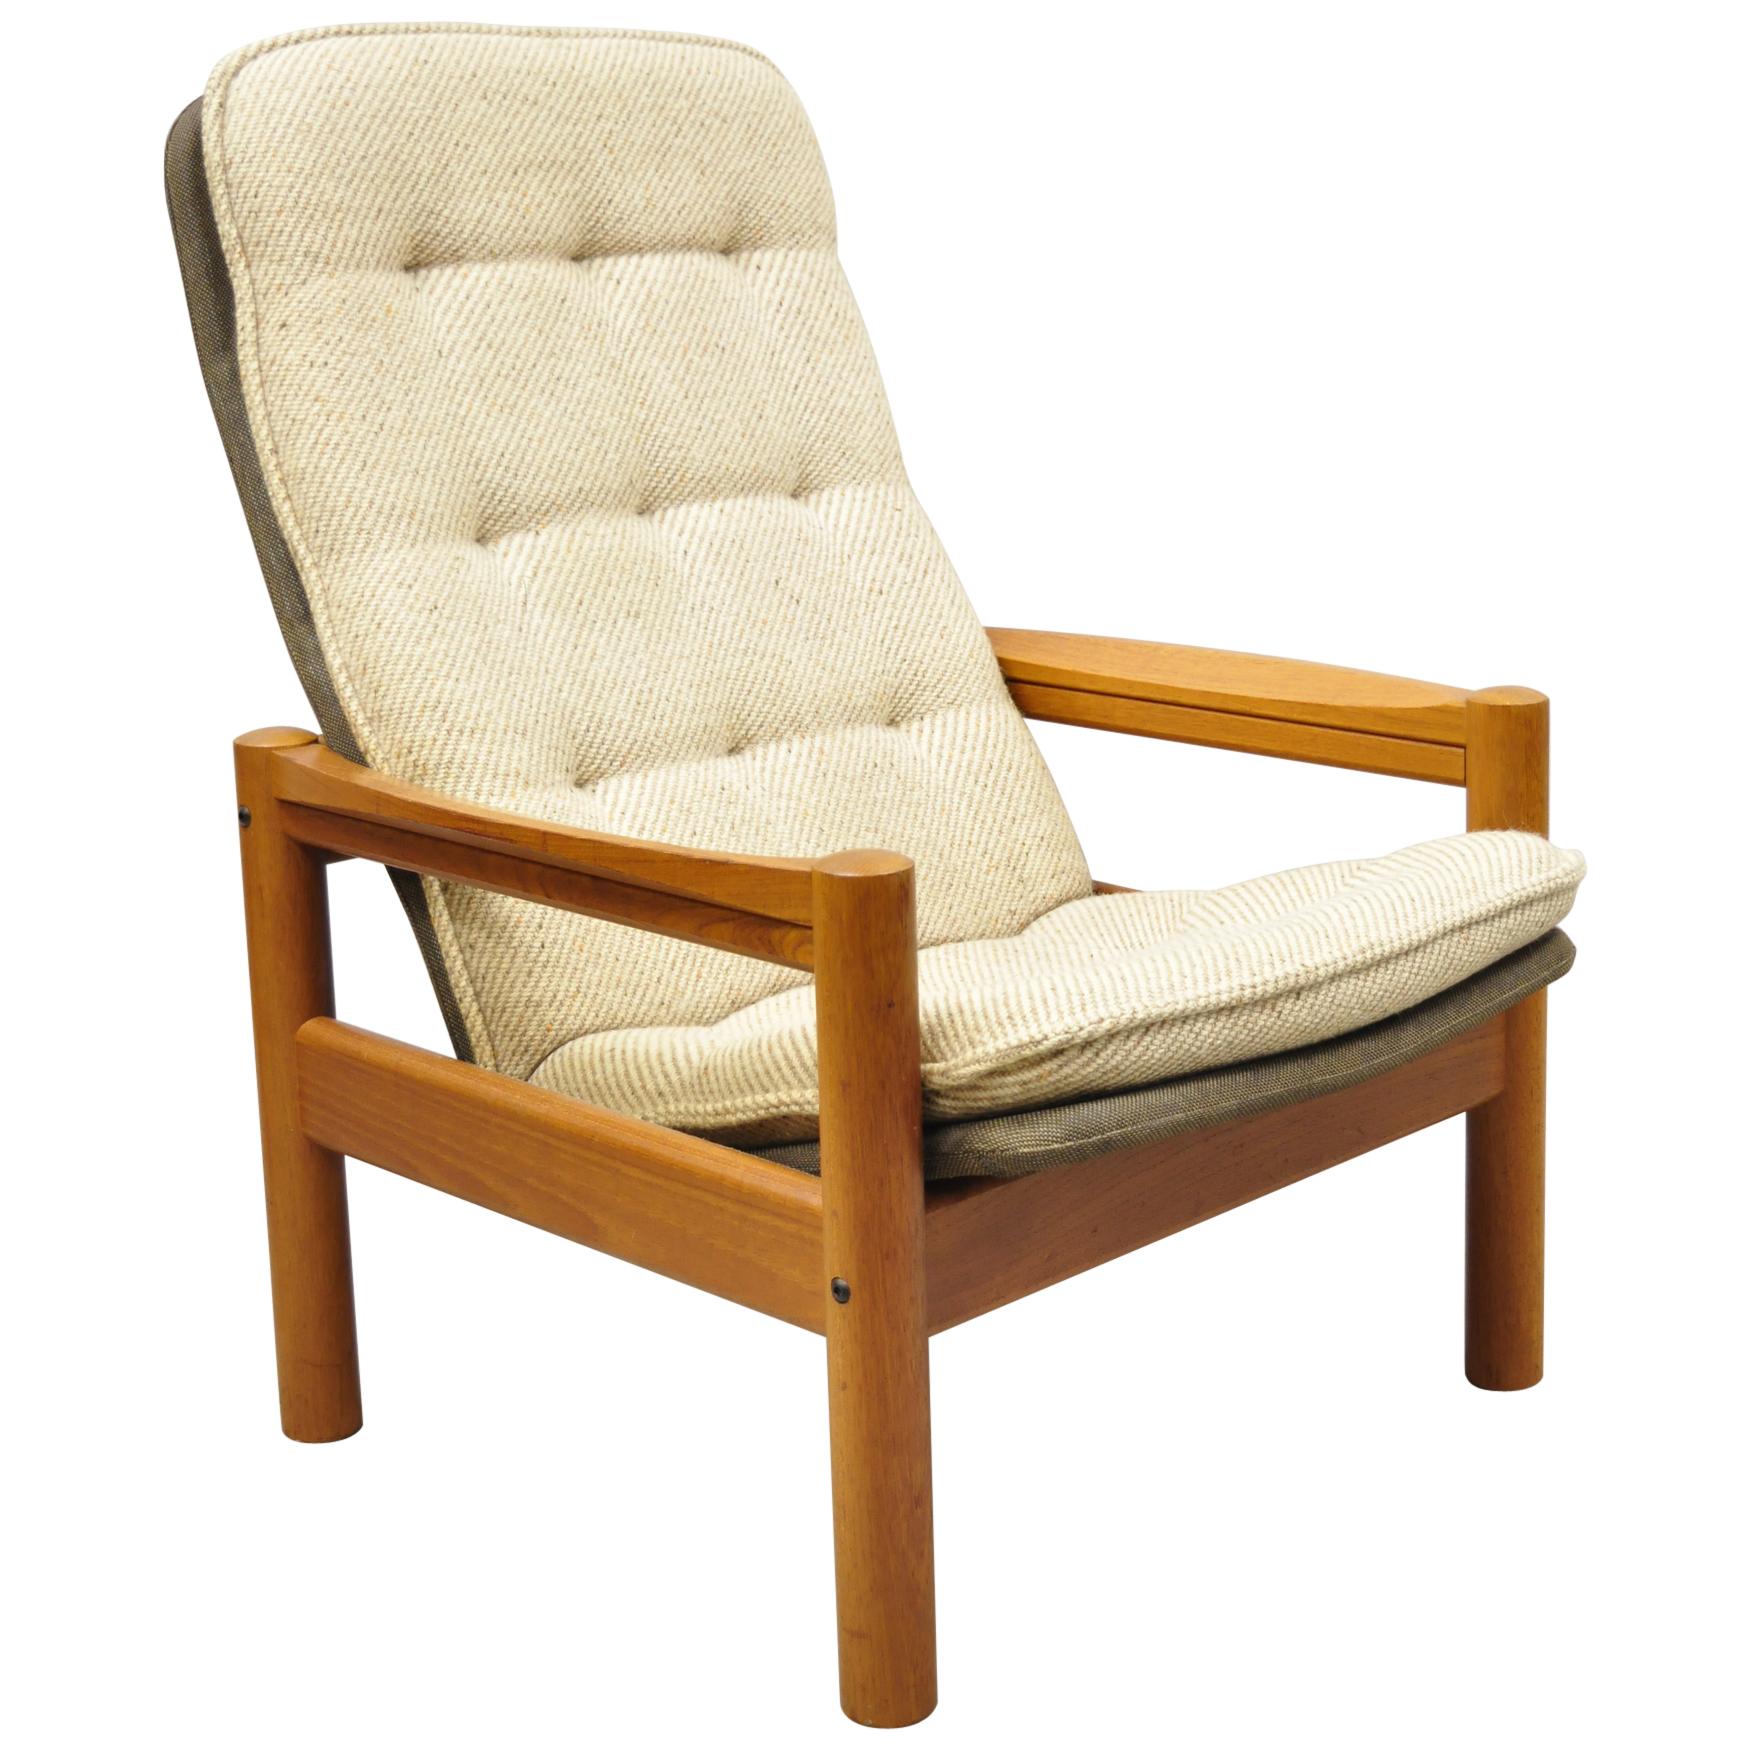 Domino Mobler Mid Century Danish Modern Teak Wood Upholstered Lounge Chair